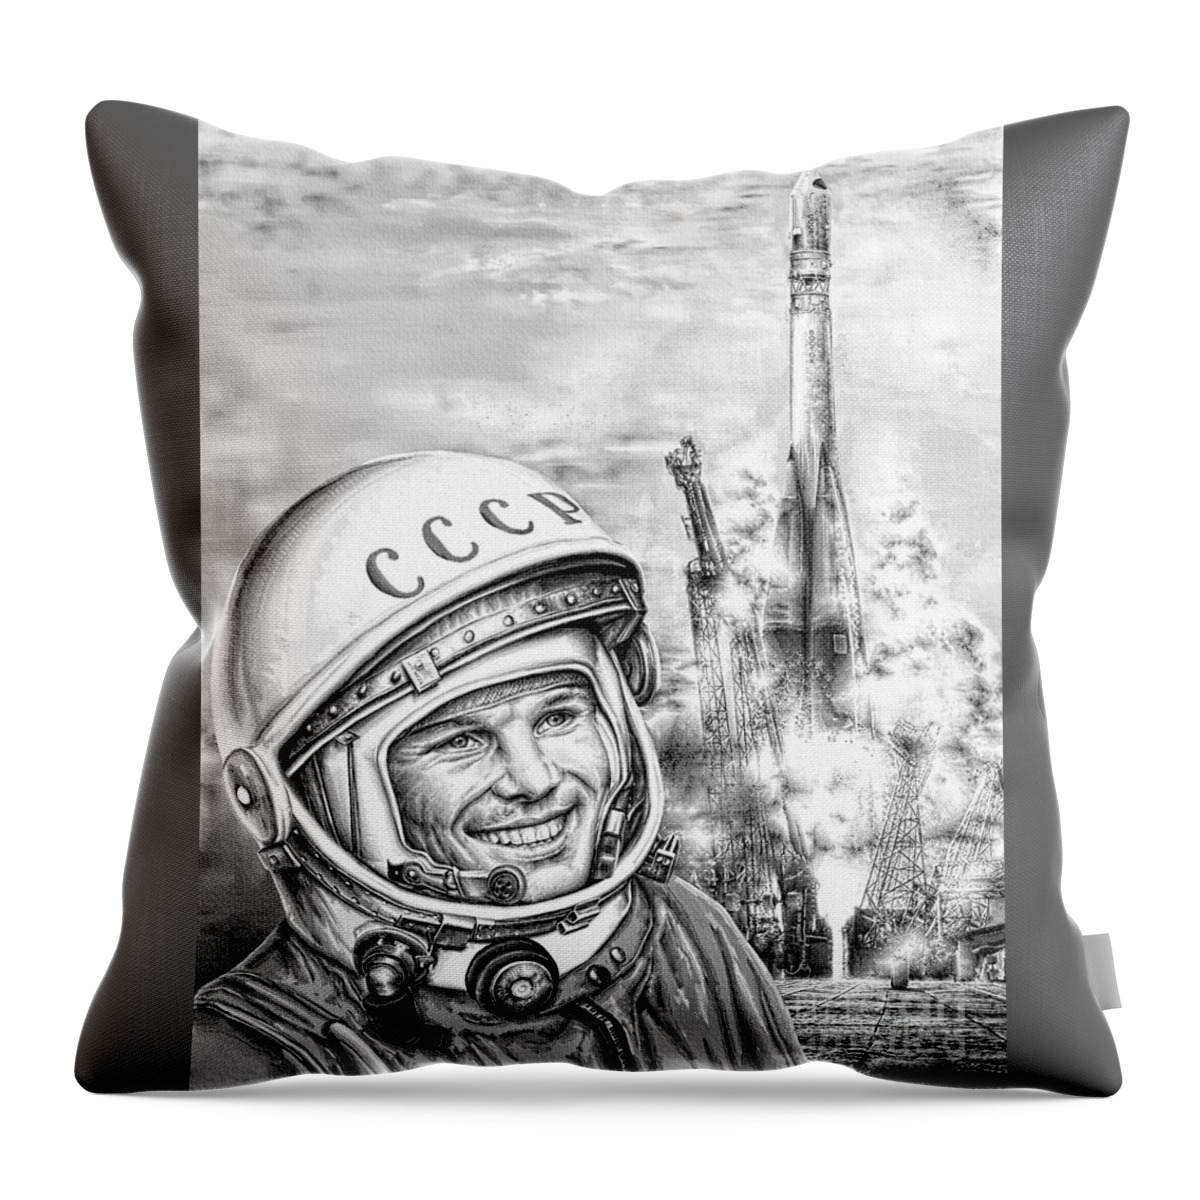 Yuri Gagarin Throw Pillow featuring the digital art Yuri Gagarin - Cosmonaut 1961 by Ian Gledhill